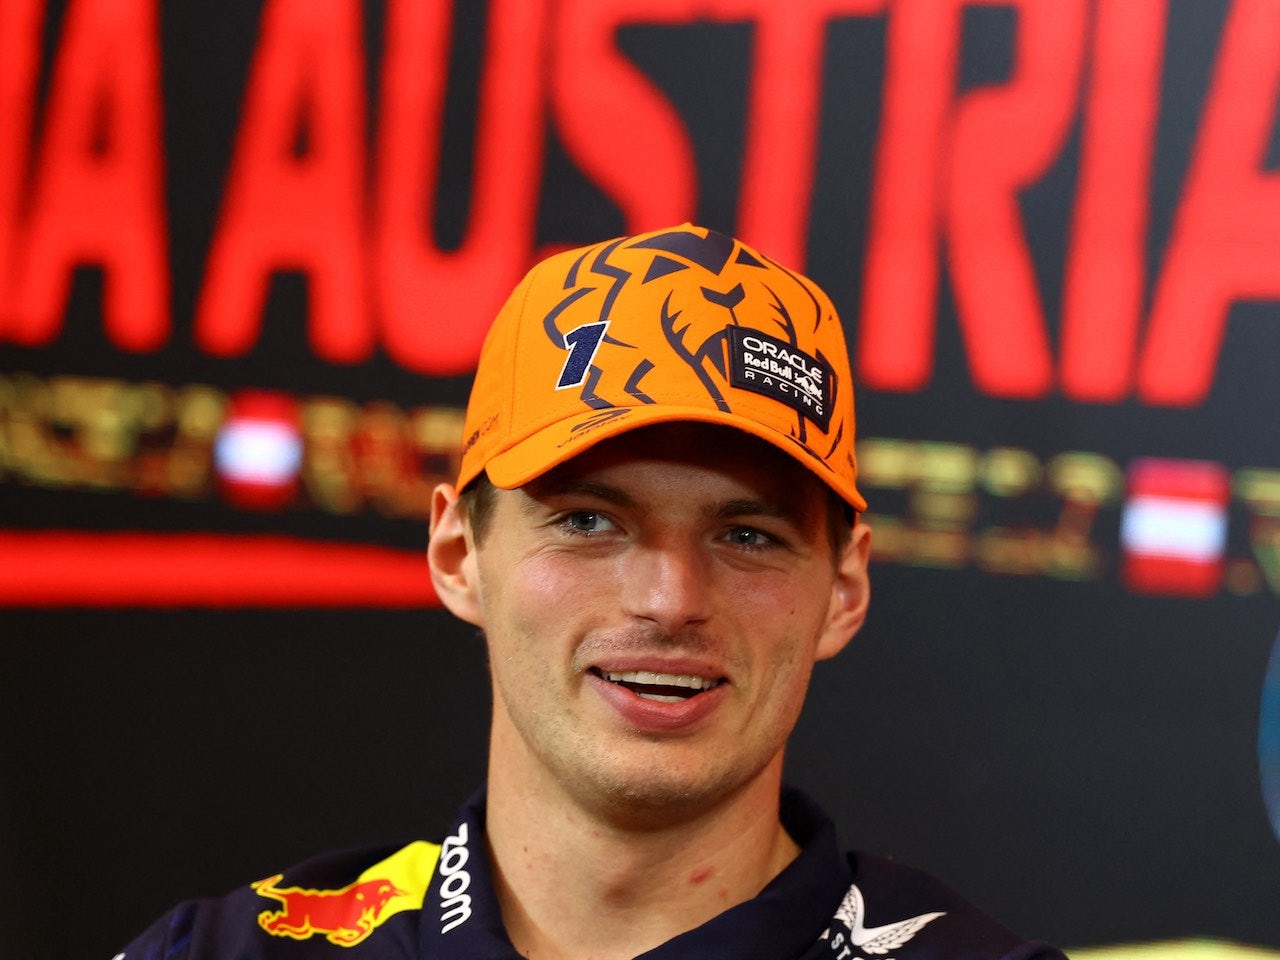 Max Verstappen edges out Charles Leclerc for Austrian Grand Prix pole